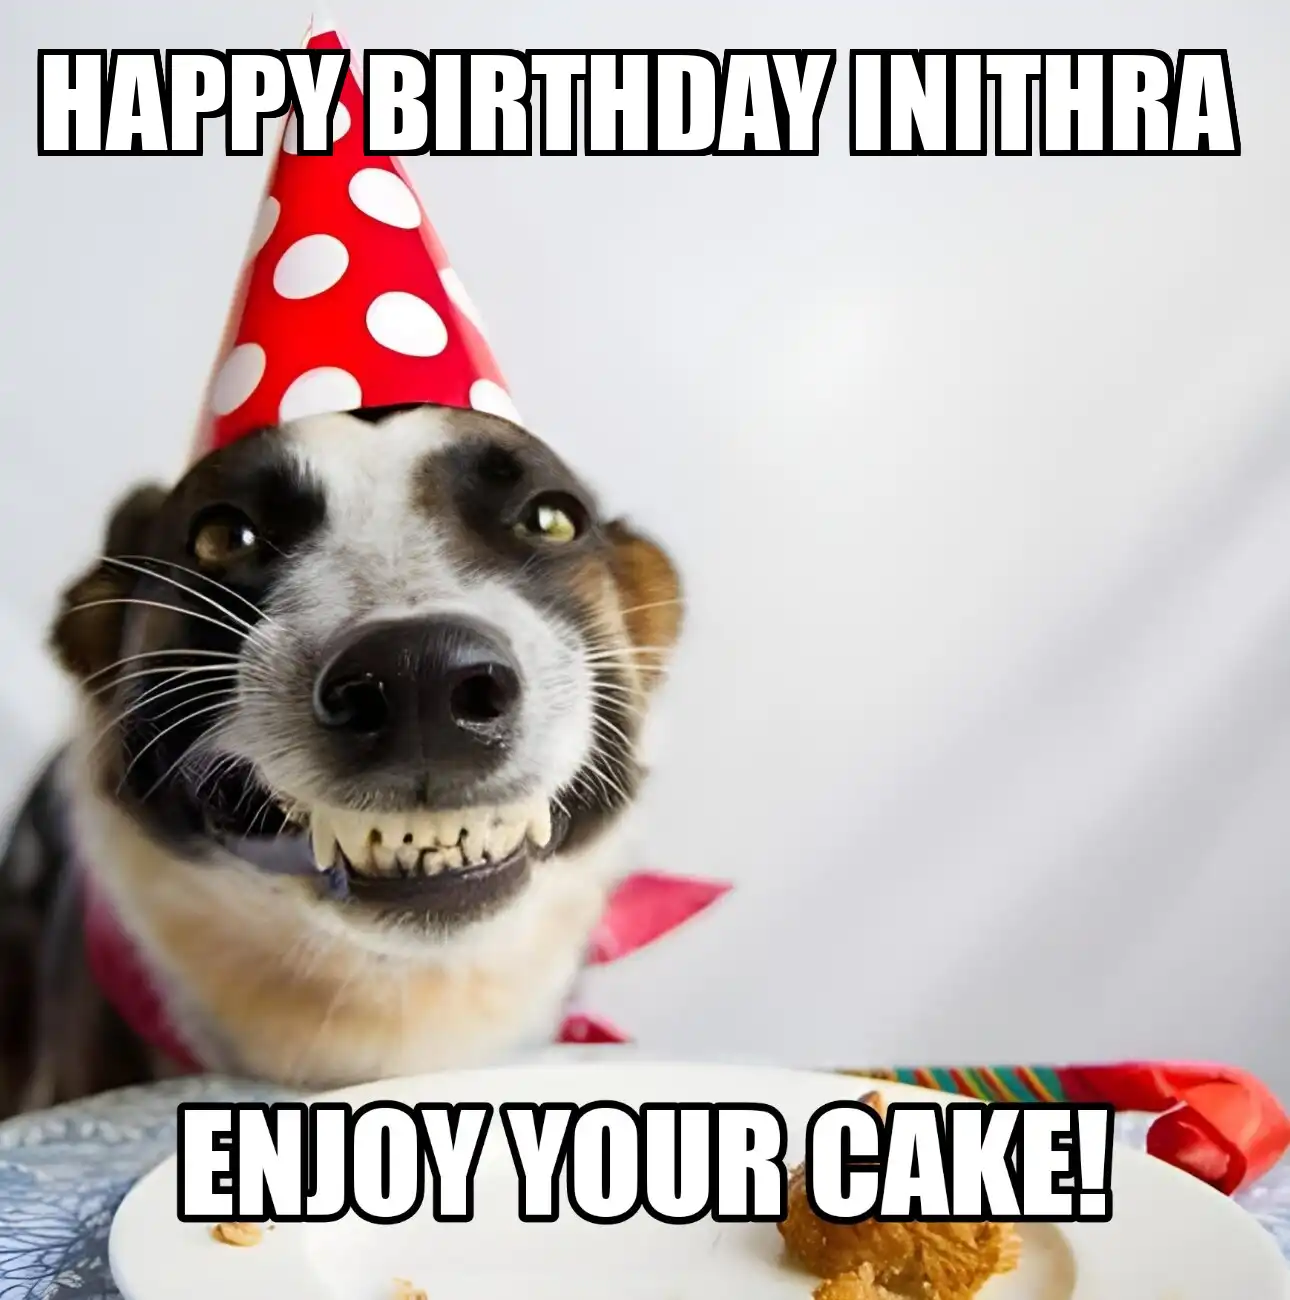 Happy Birthday Inithra Enjoy Your Cake Dog Meme